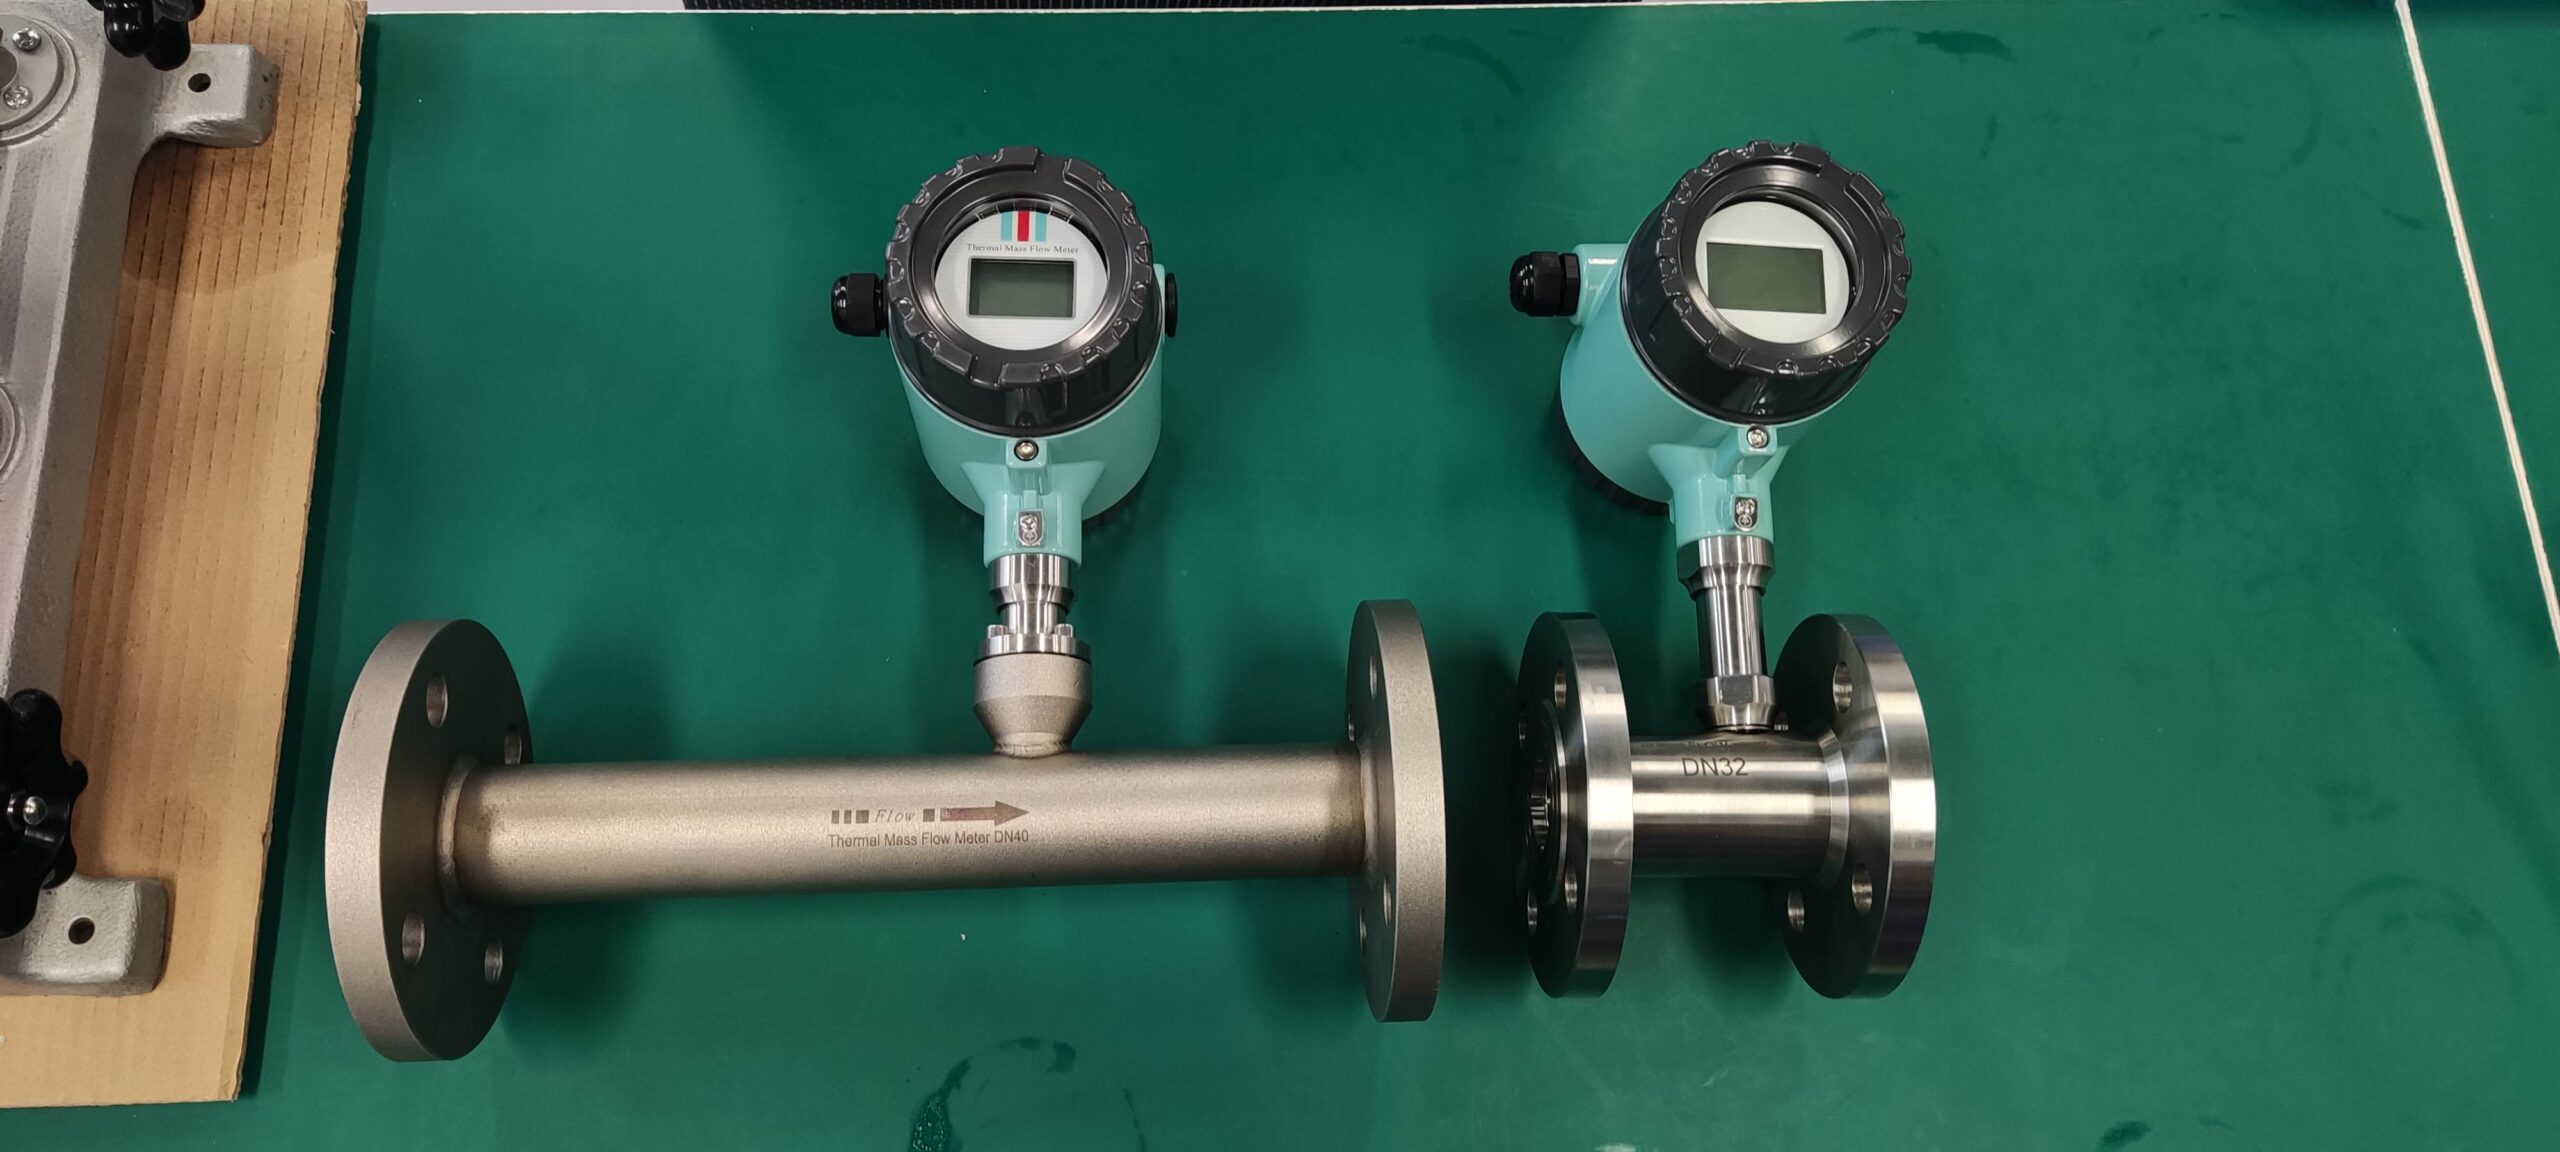 Sensitive Measure 0.1-100nm/S Velocity Range Compress Air Flowmeter Thermal Gas Mass Flow Meter